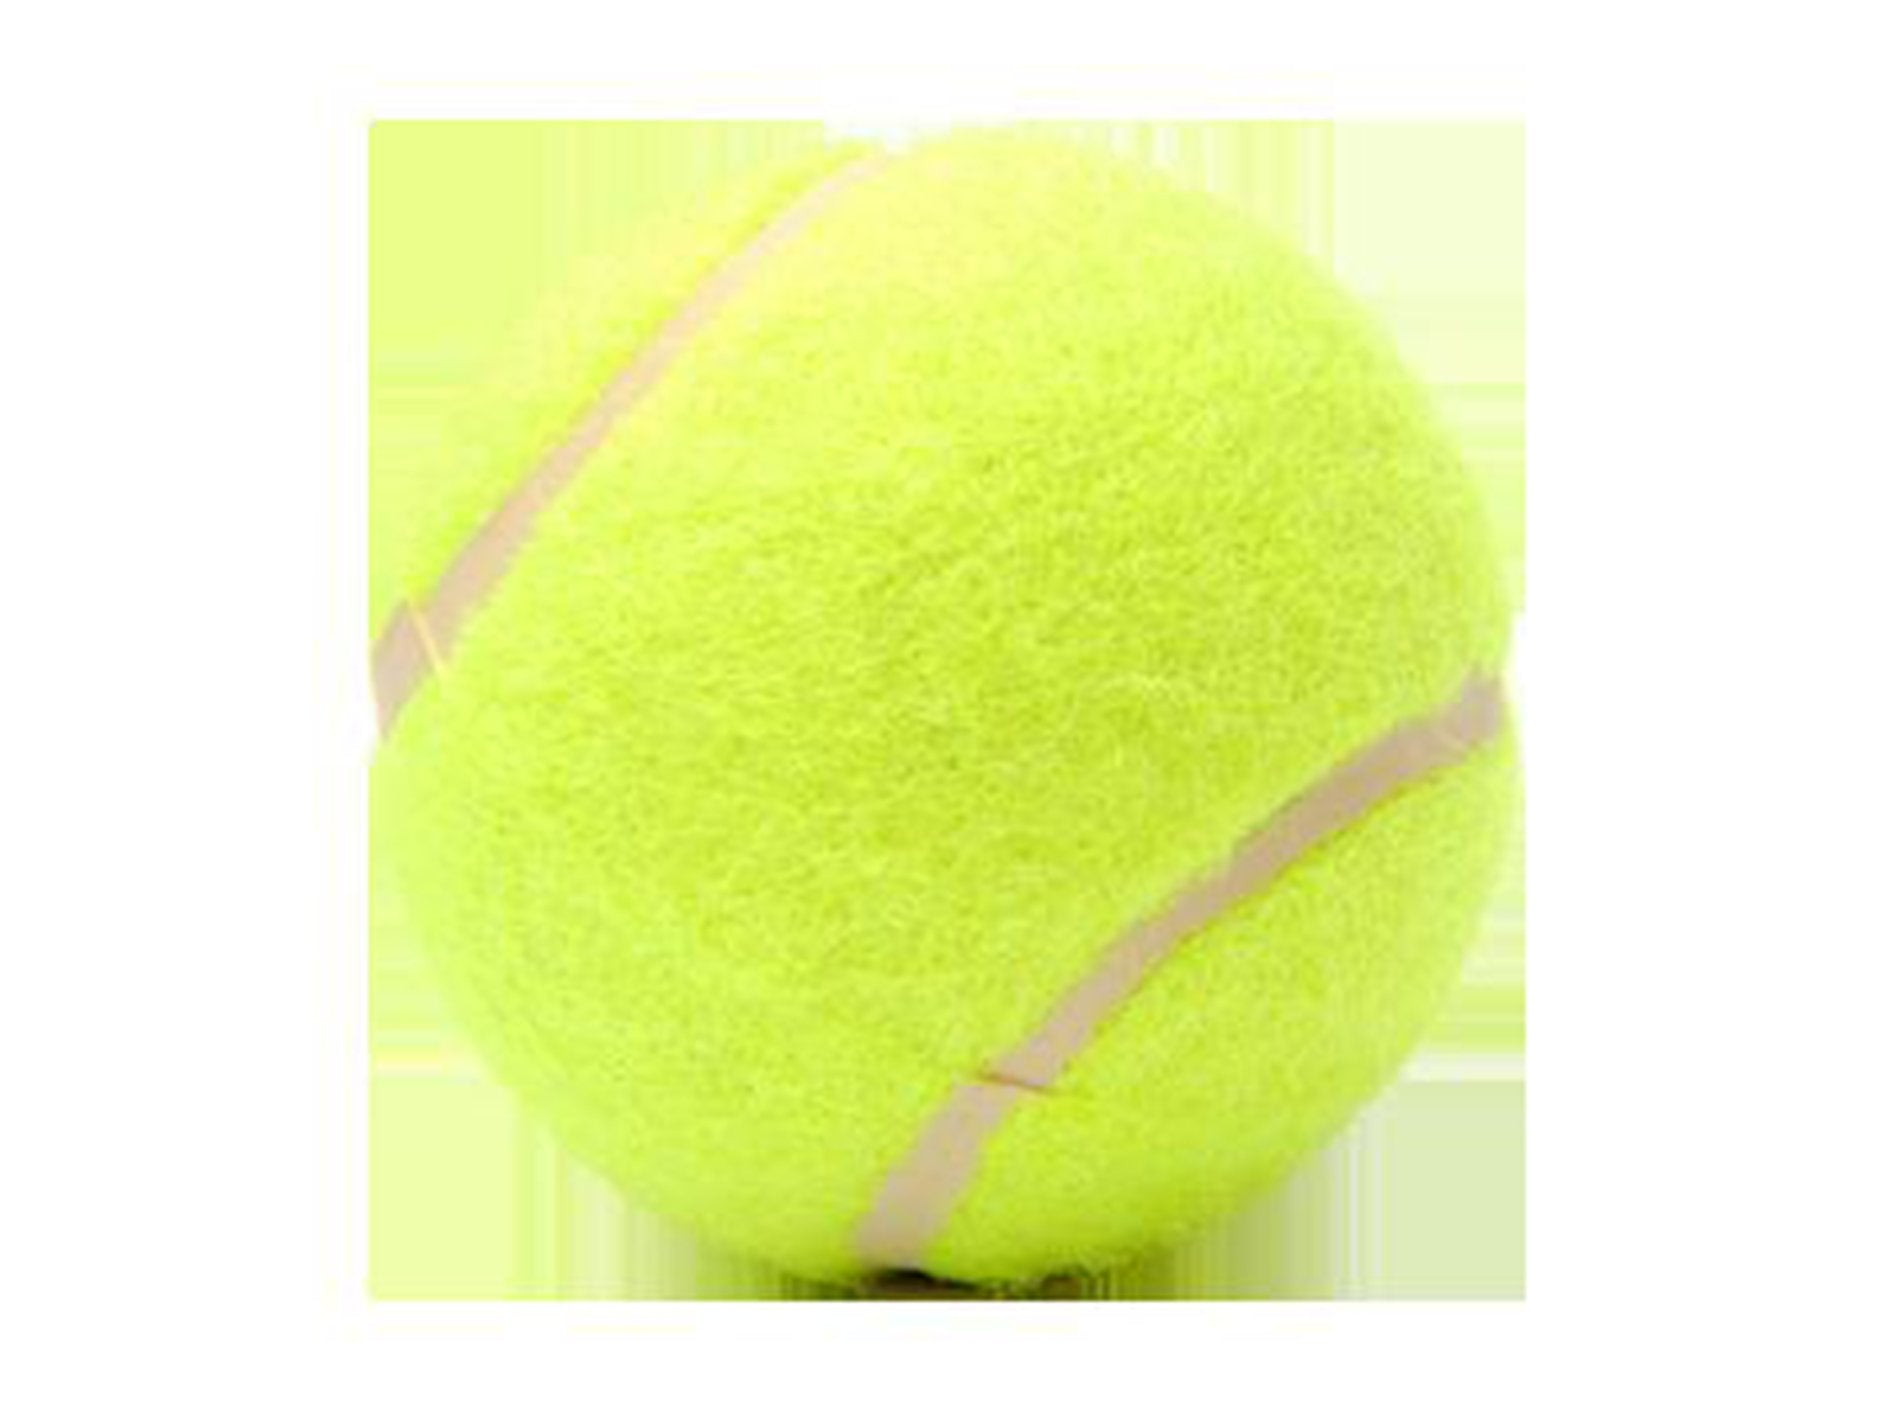 Tennis Ball Medium Size (18cm) - VIR Wholesale